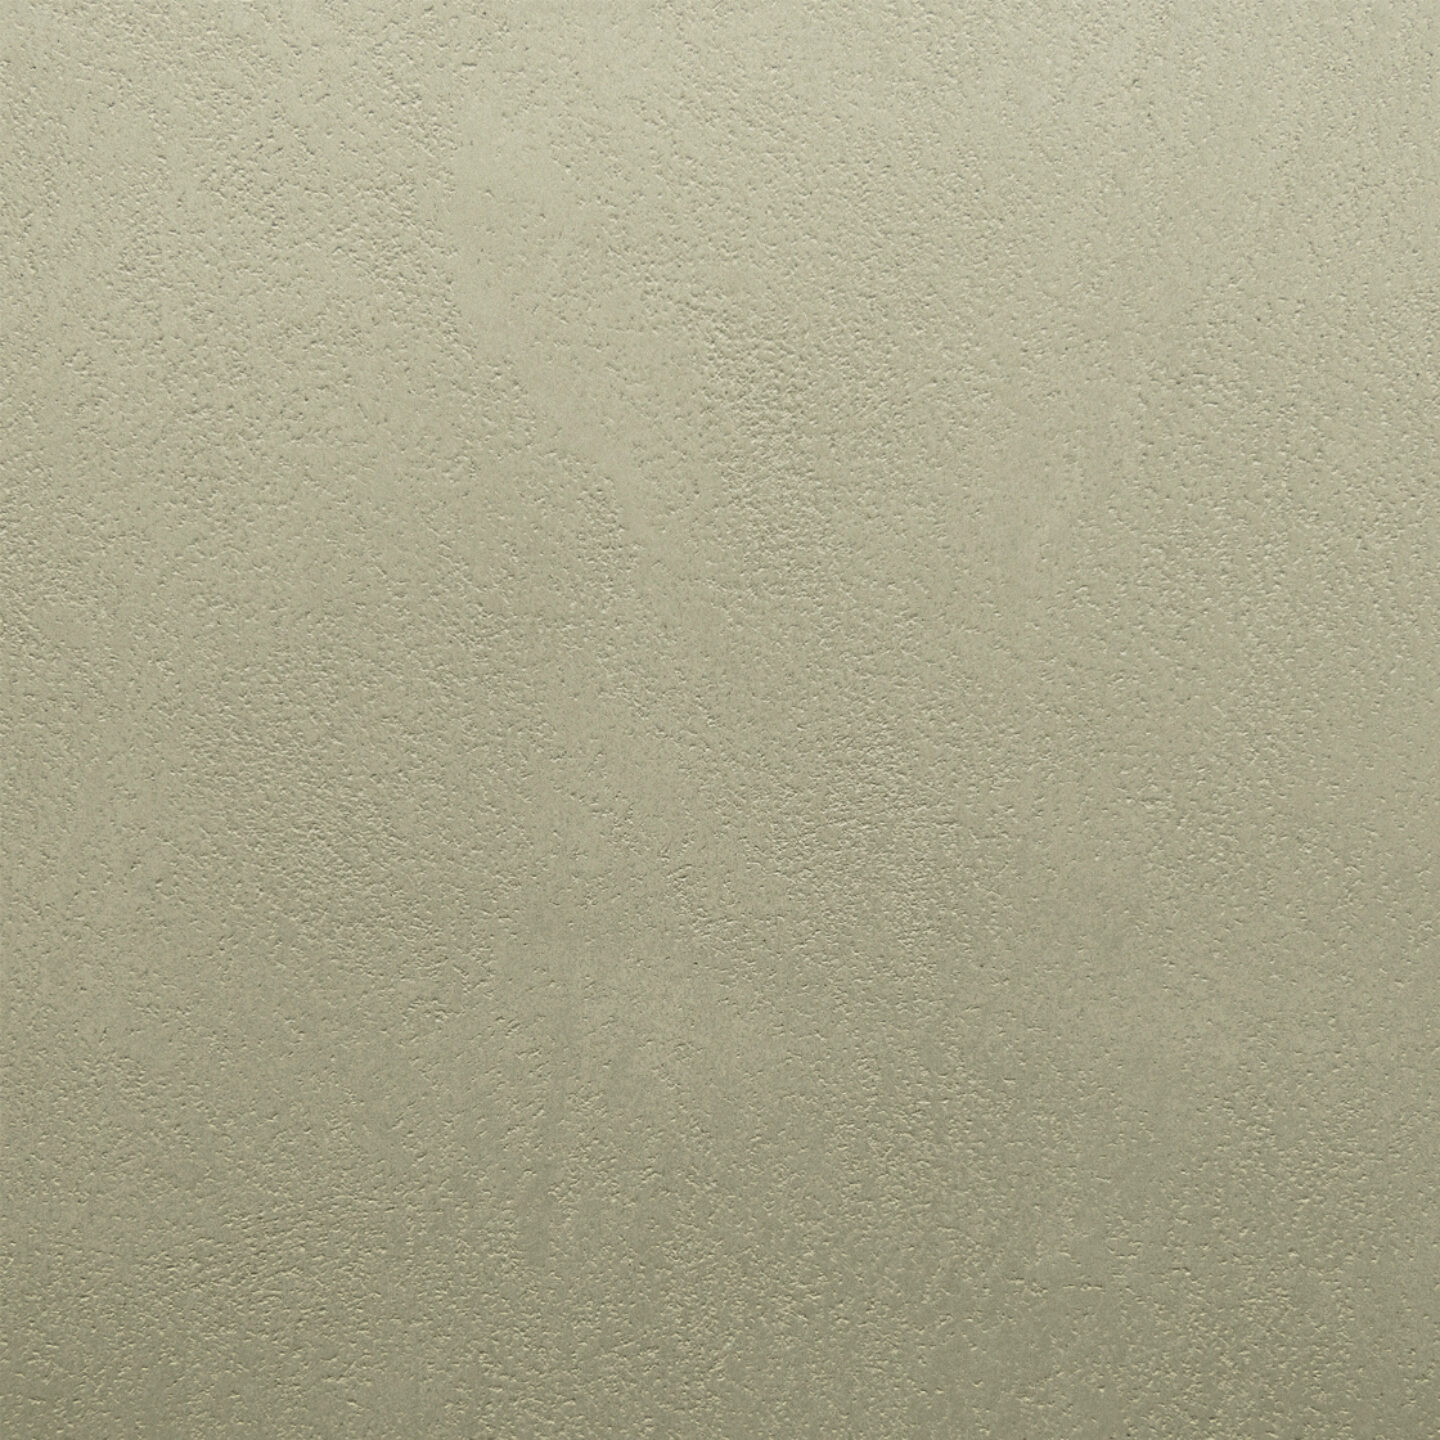 Close up of Armourcoat leatherstone exterior polished plaster finish - 63